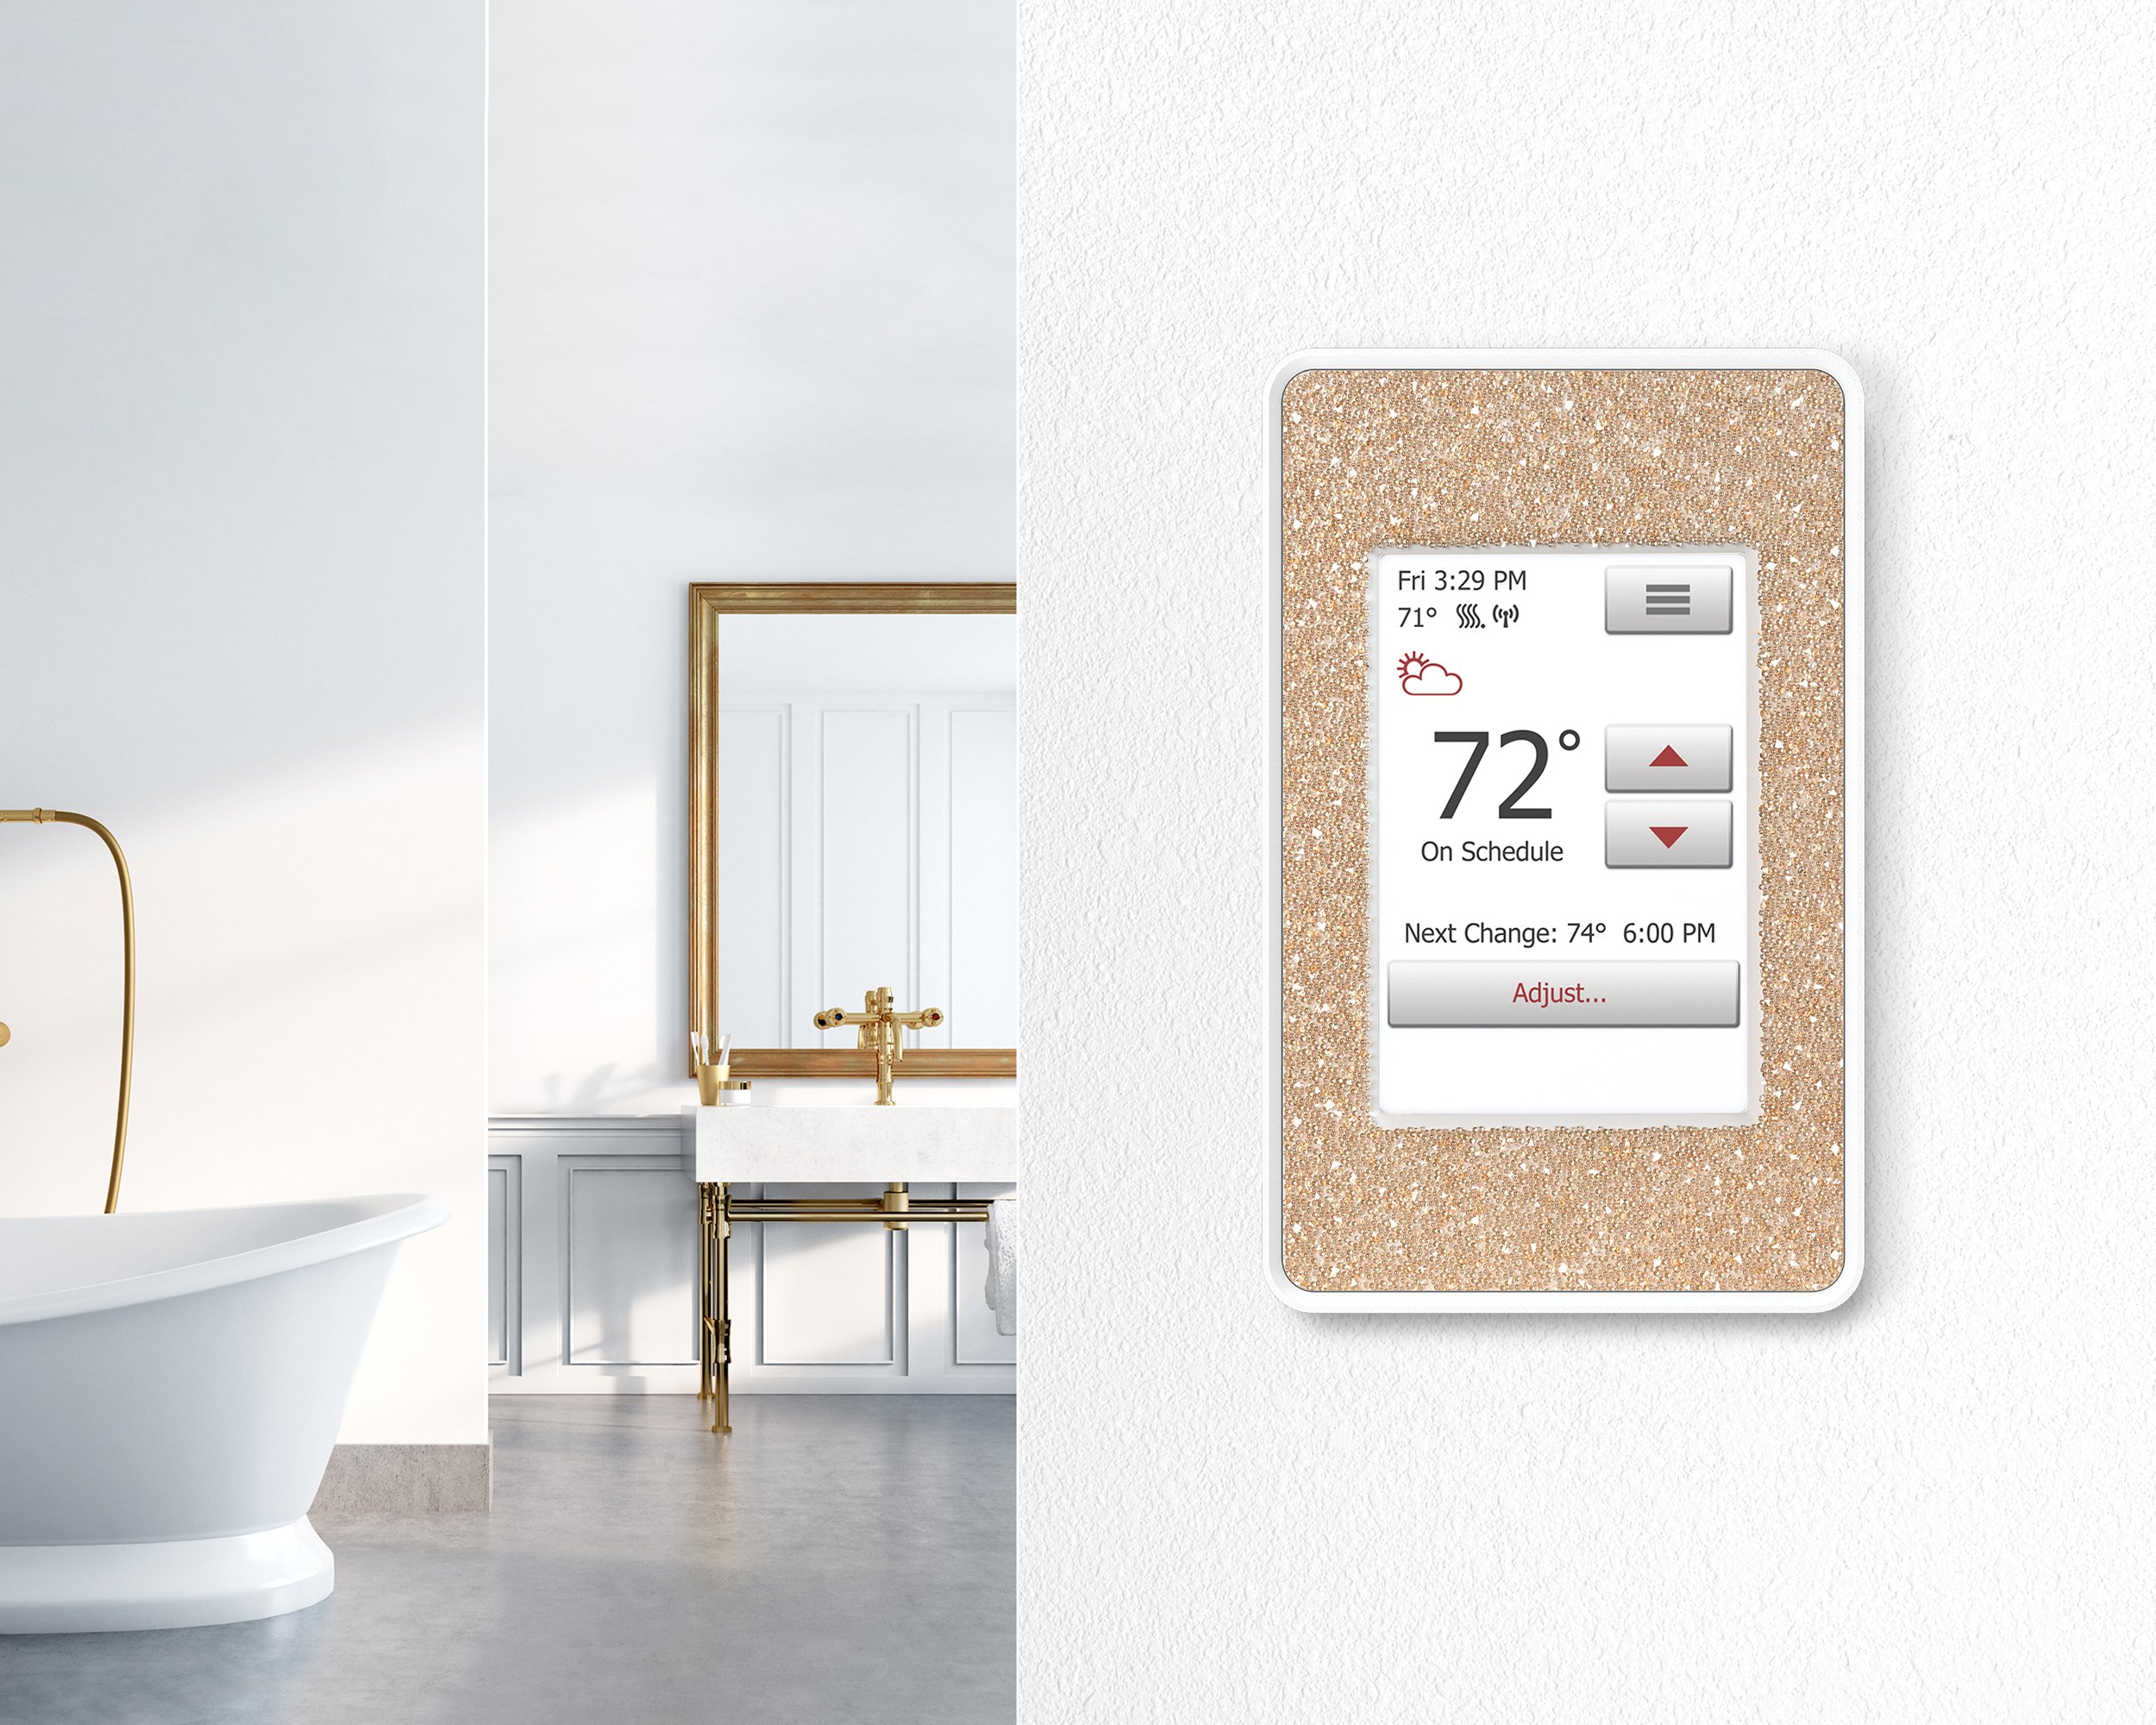 Swarovski crystal golden shadow nspire touch wifi thermostat lifestyle in a bathroom -im12511-101420